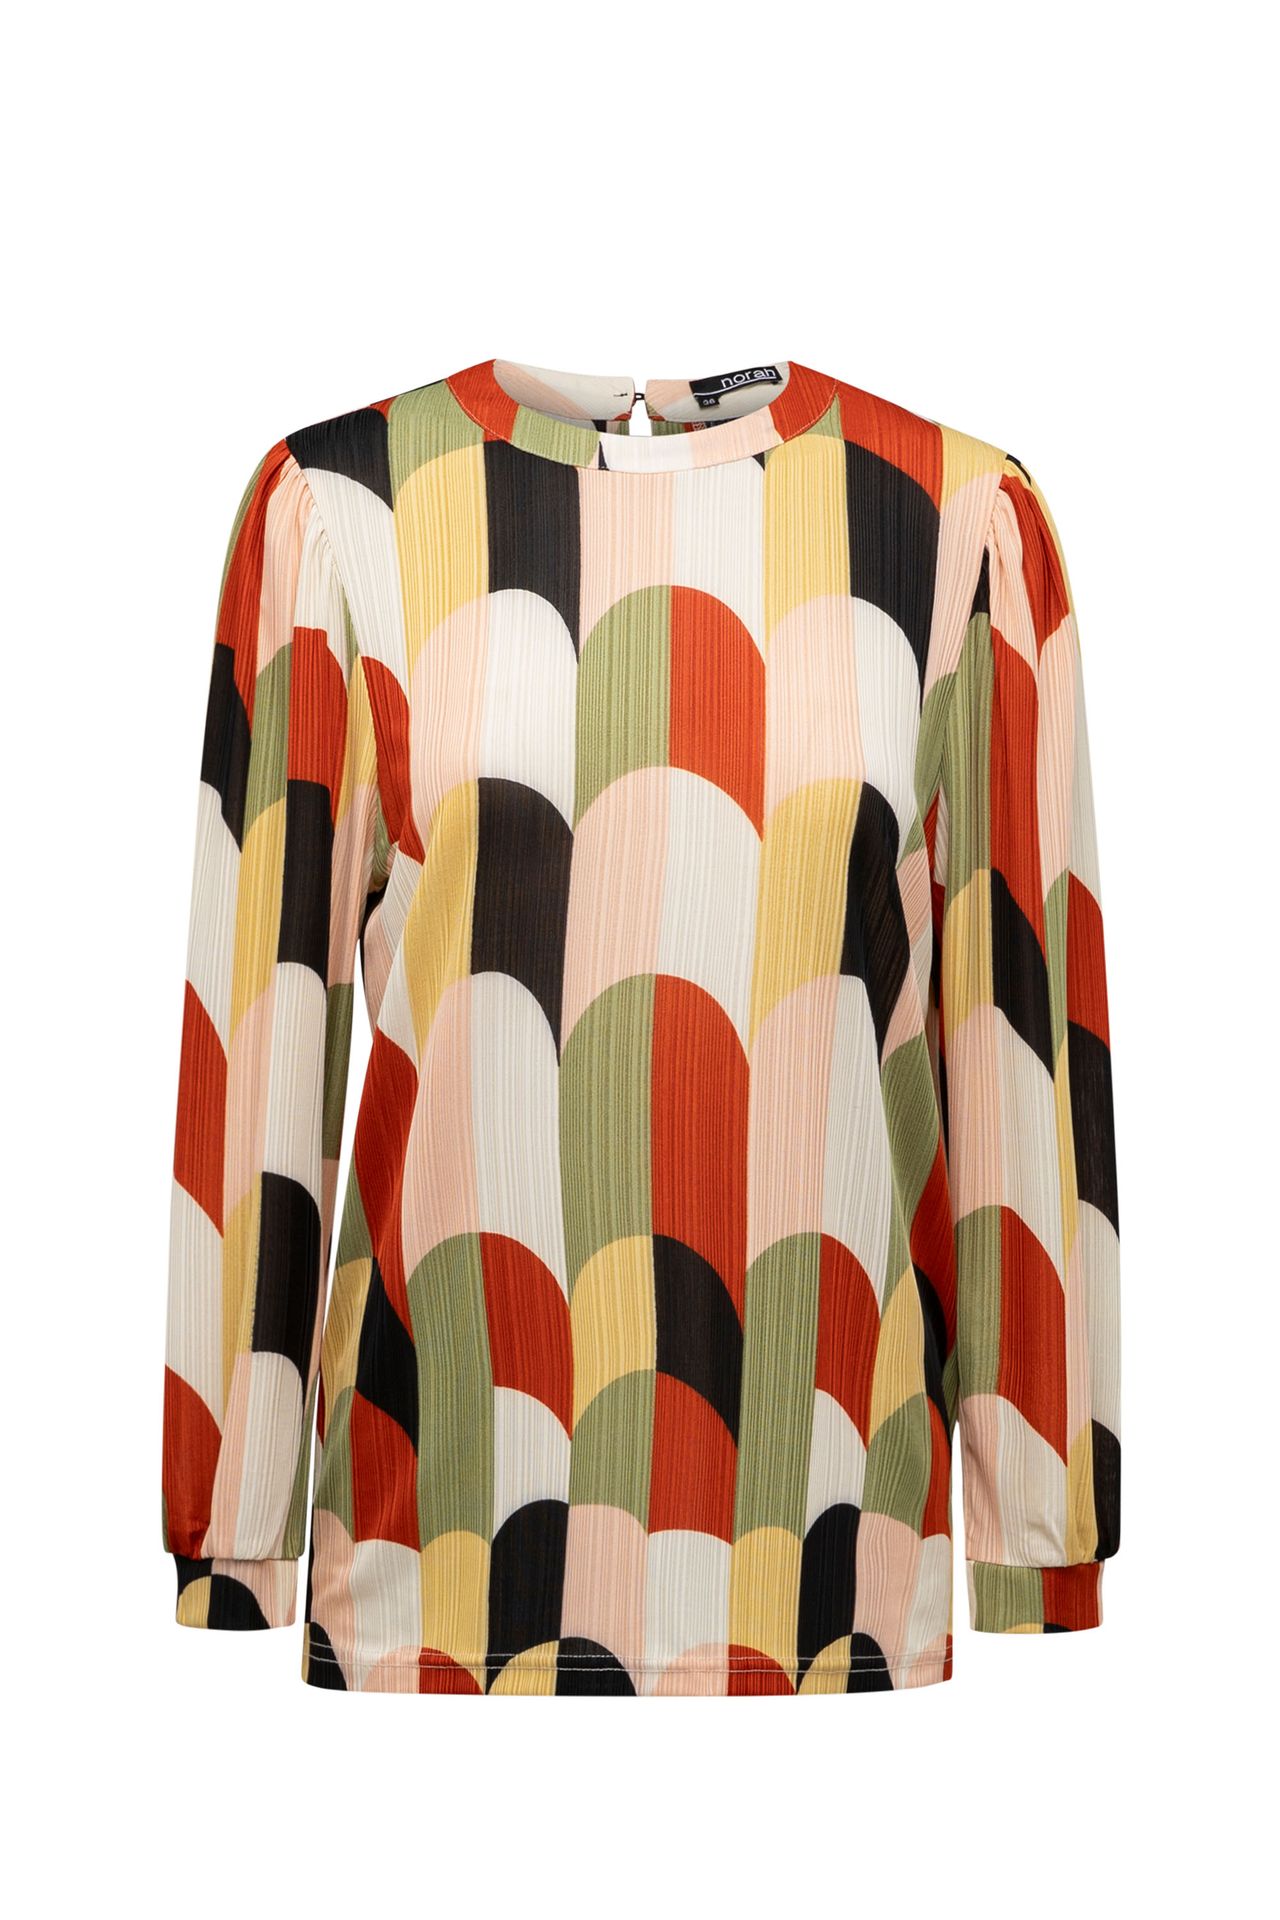 Norah Shirt meerkleurig multicolor 213438-002